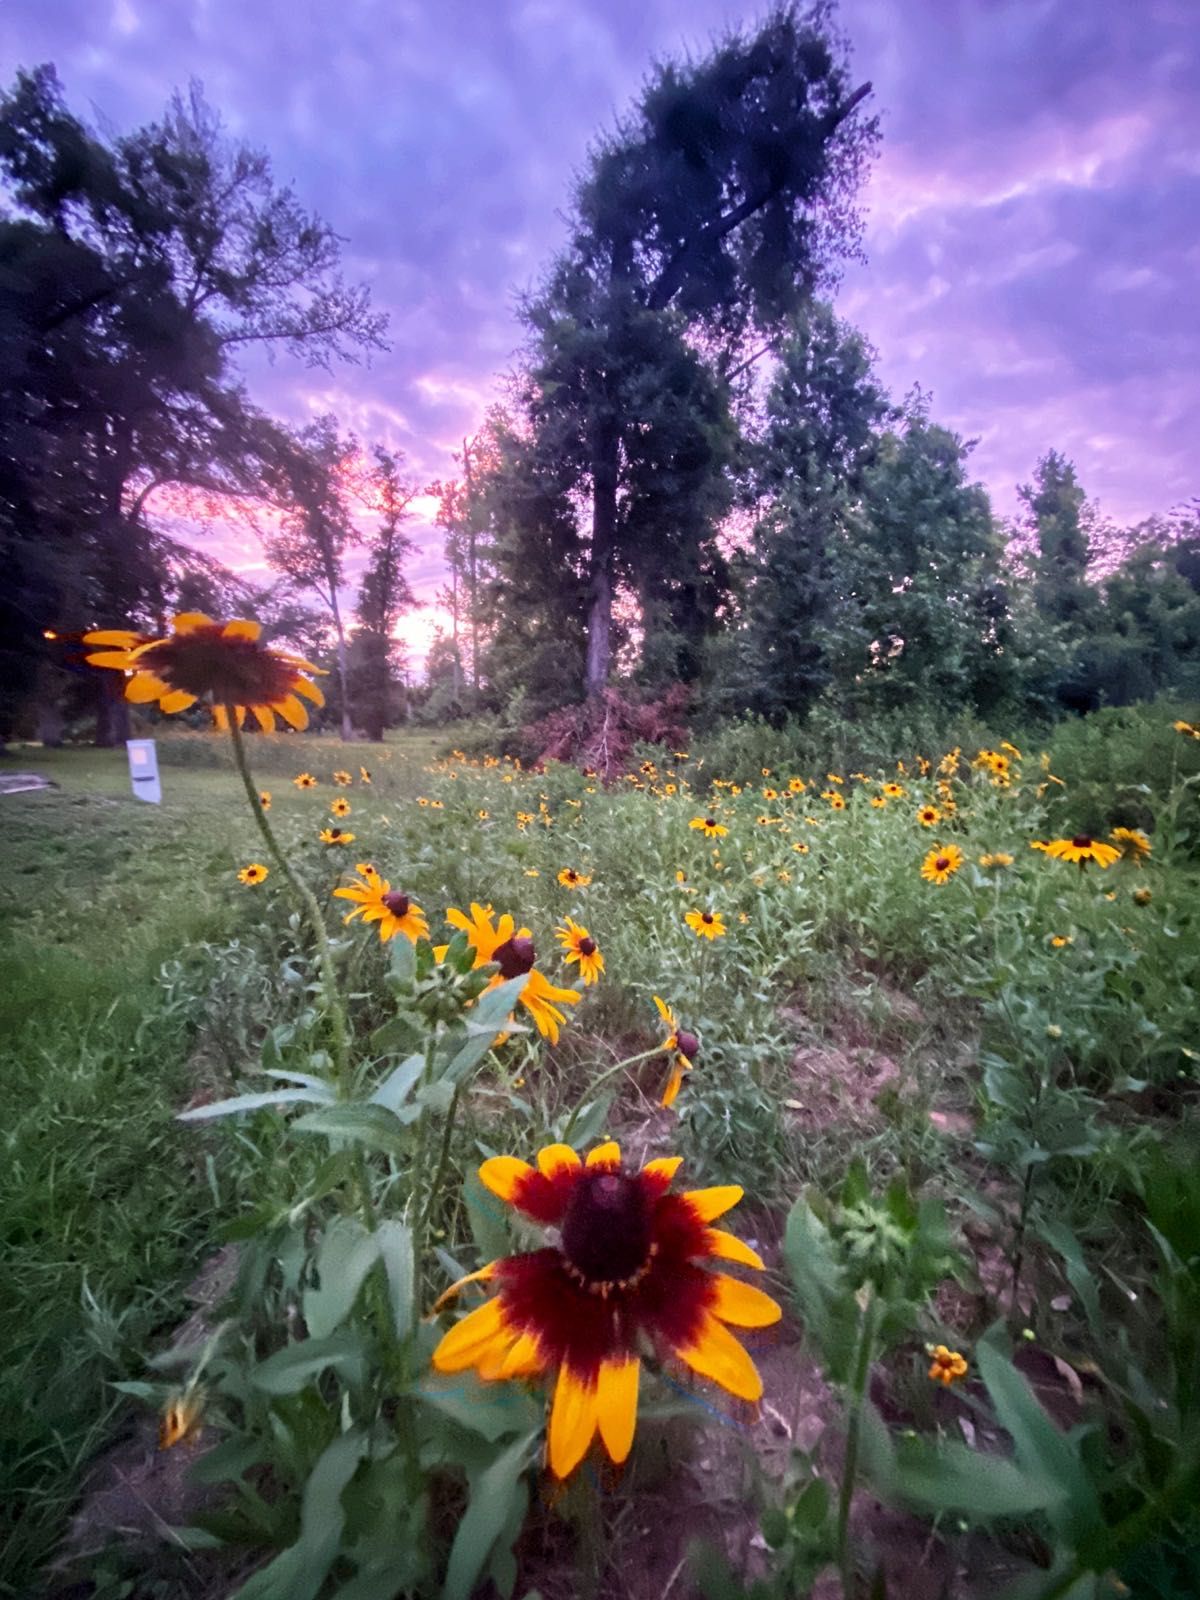 View from this evenings sunflower-set near Bainbridge, Georgia